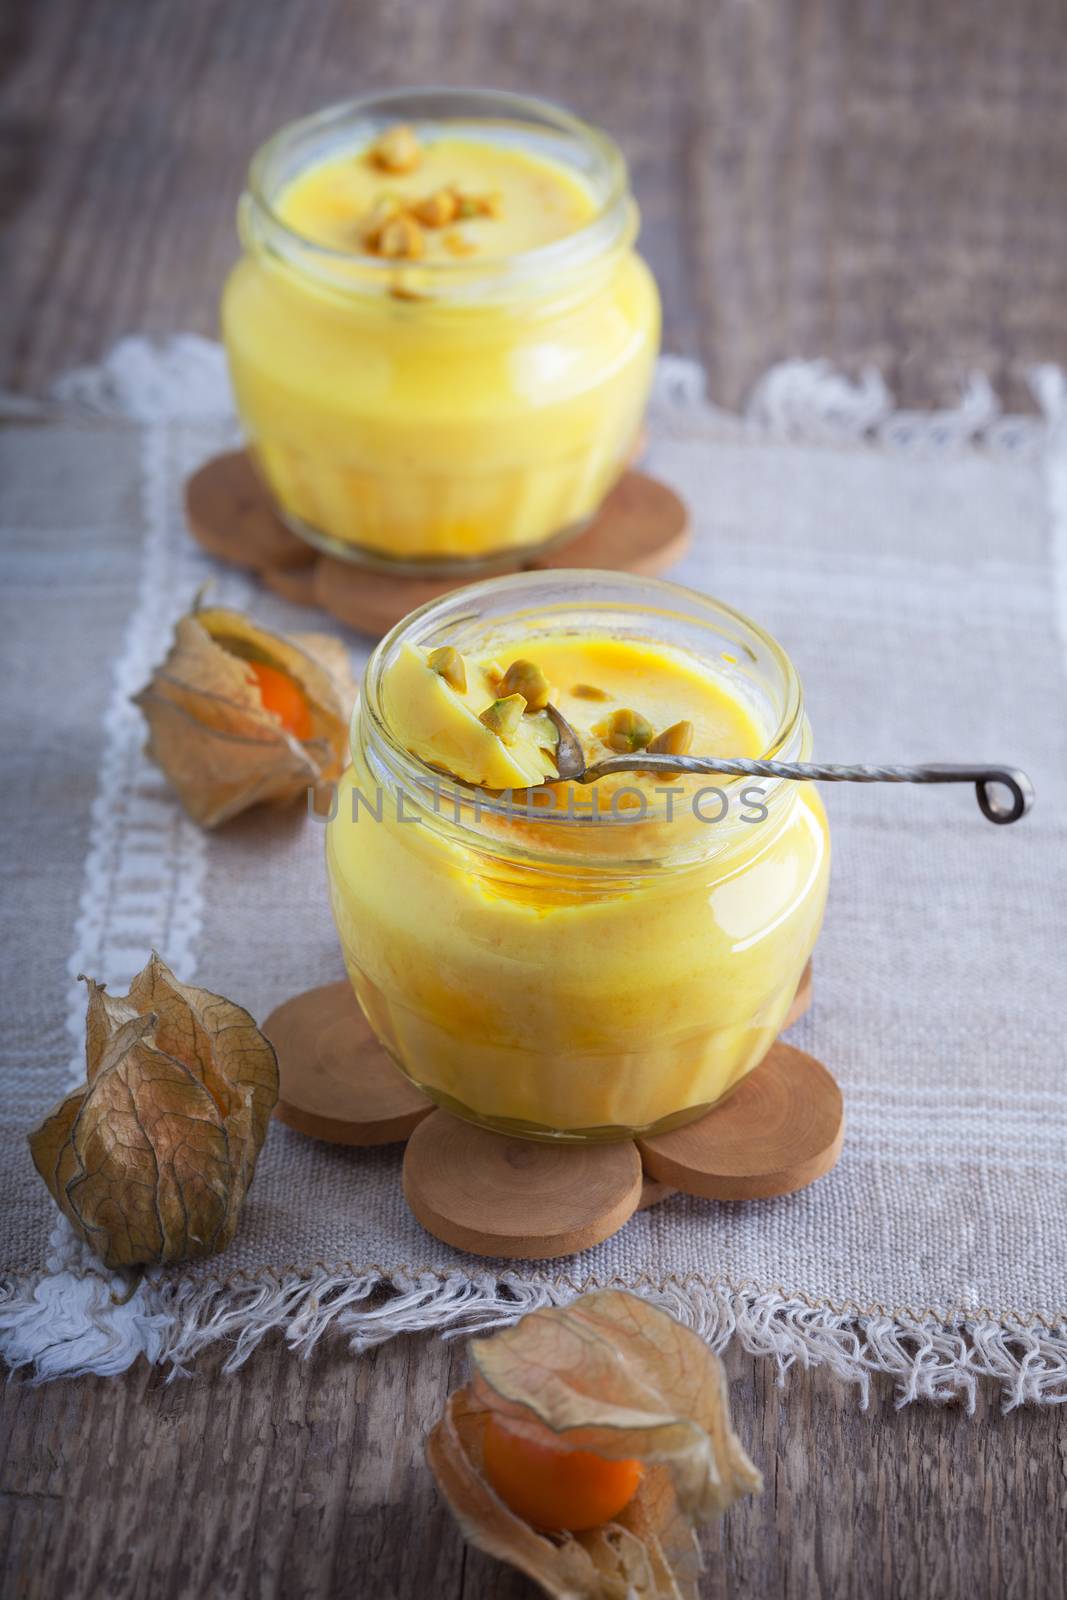 Panna cotta of almond milk with saffron by supercat67